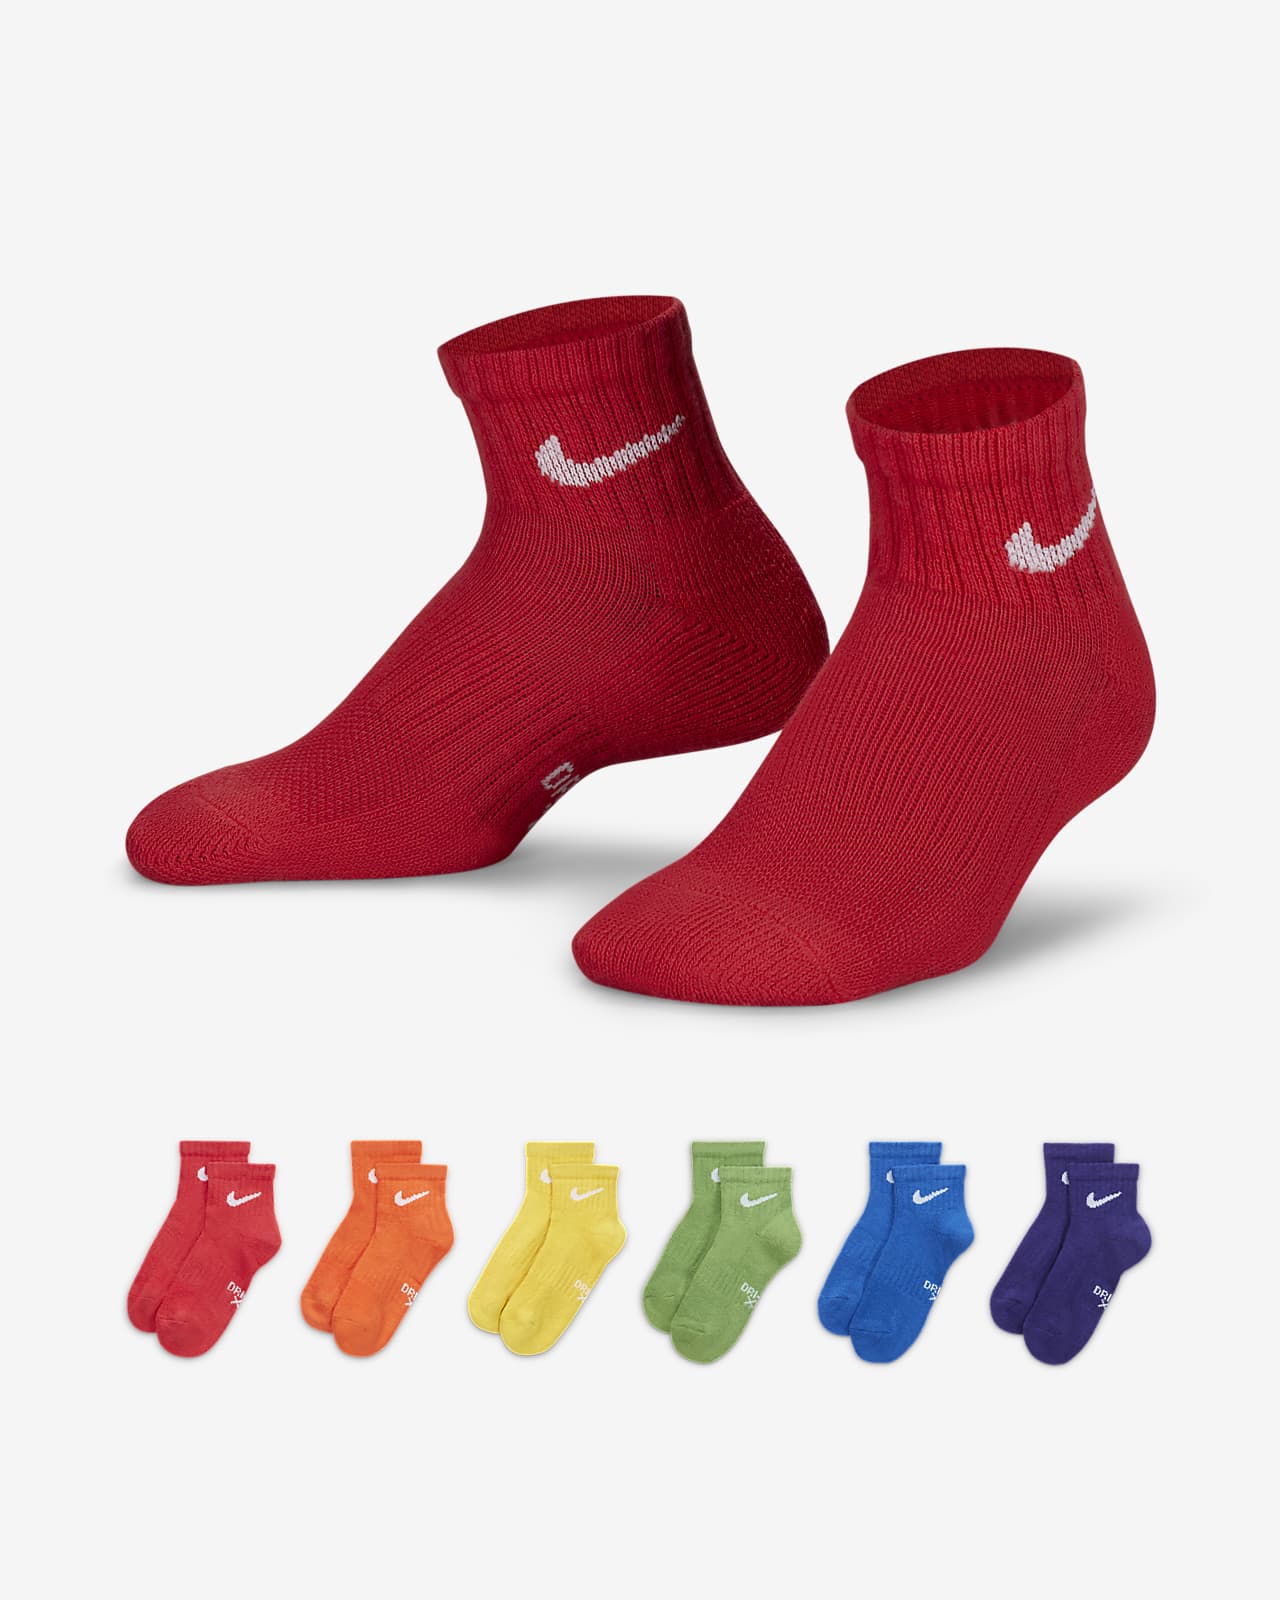 Nike Dri-FIT-Knöchelsocken für jüngere Kinder (6er-Pack)